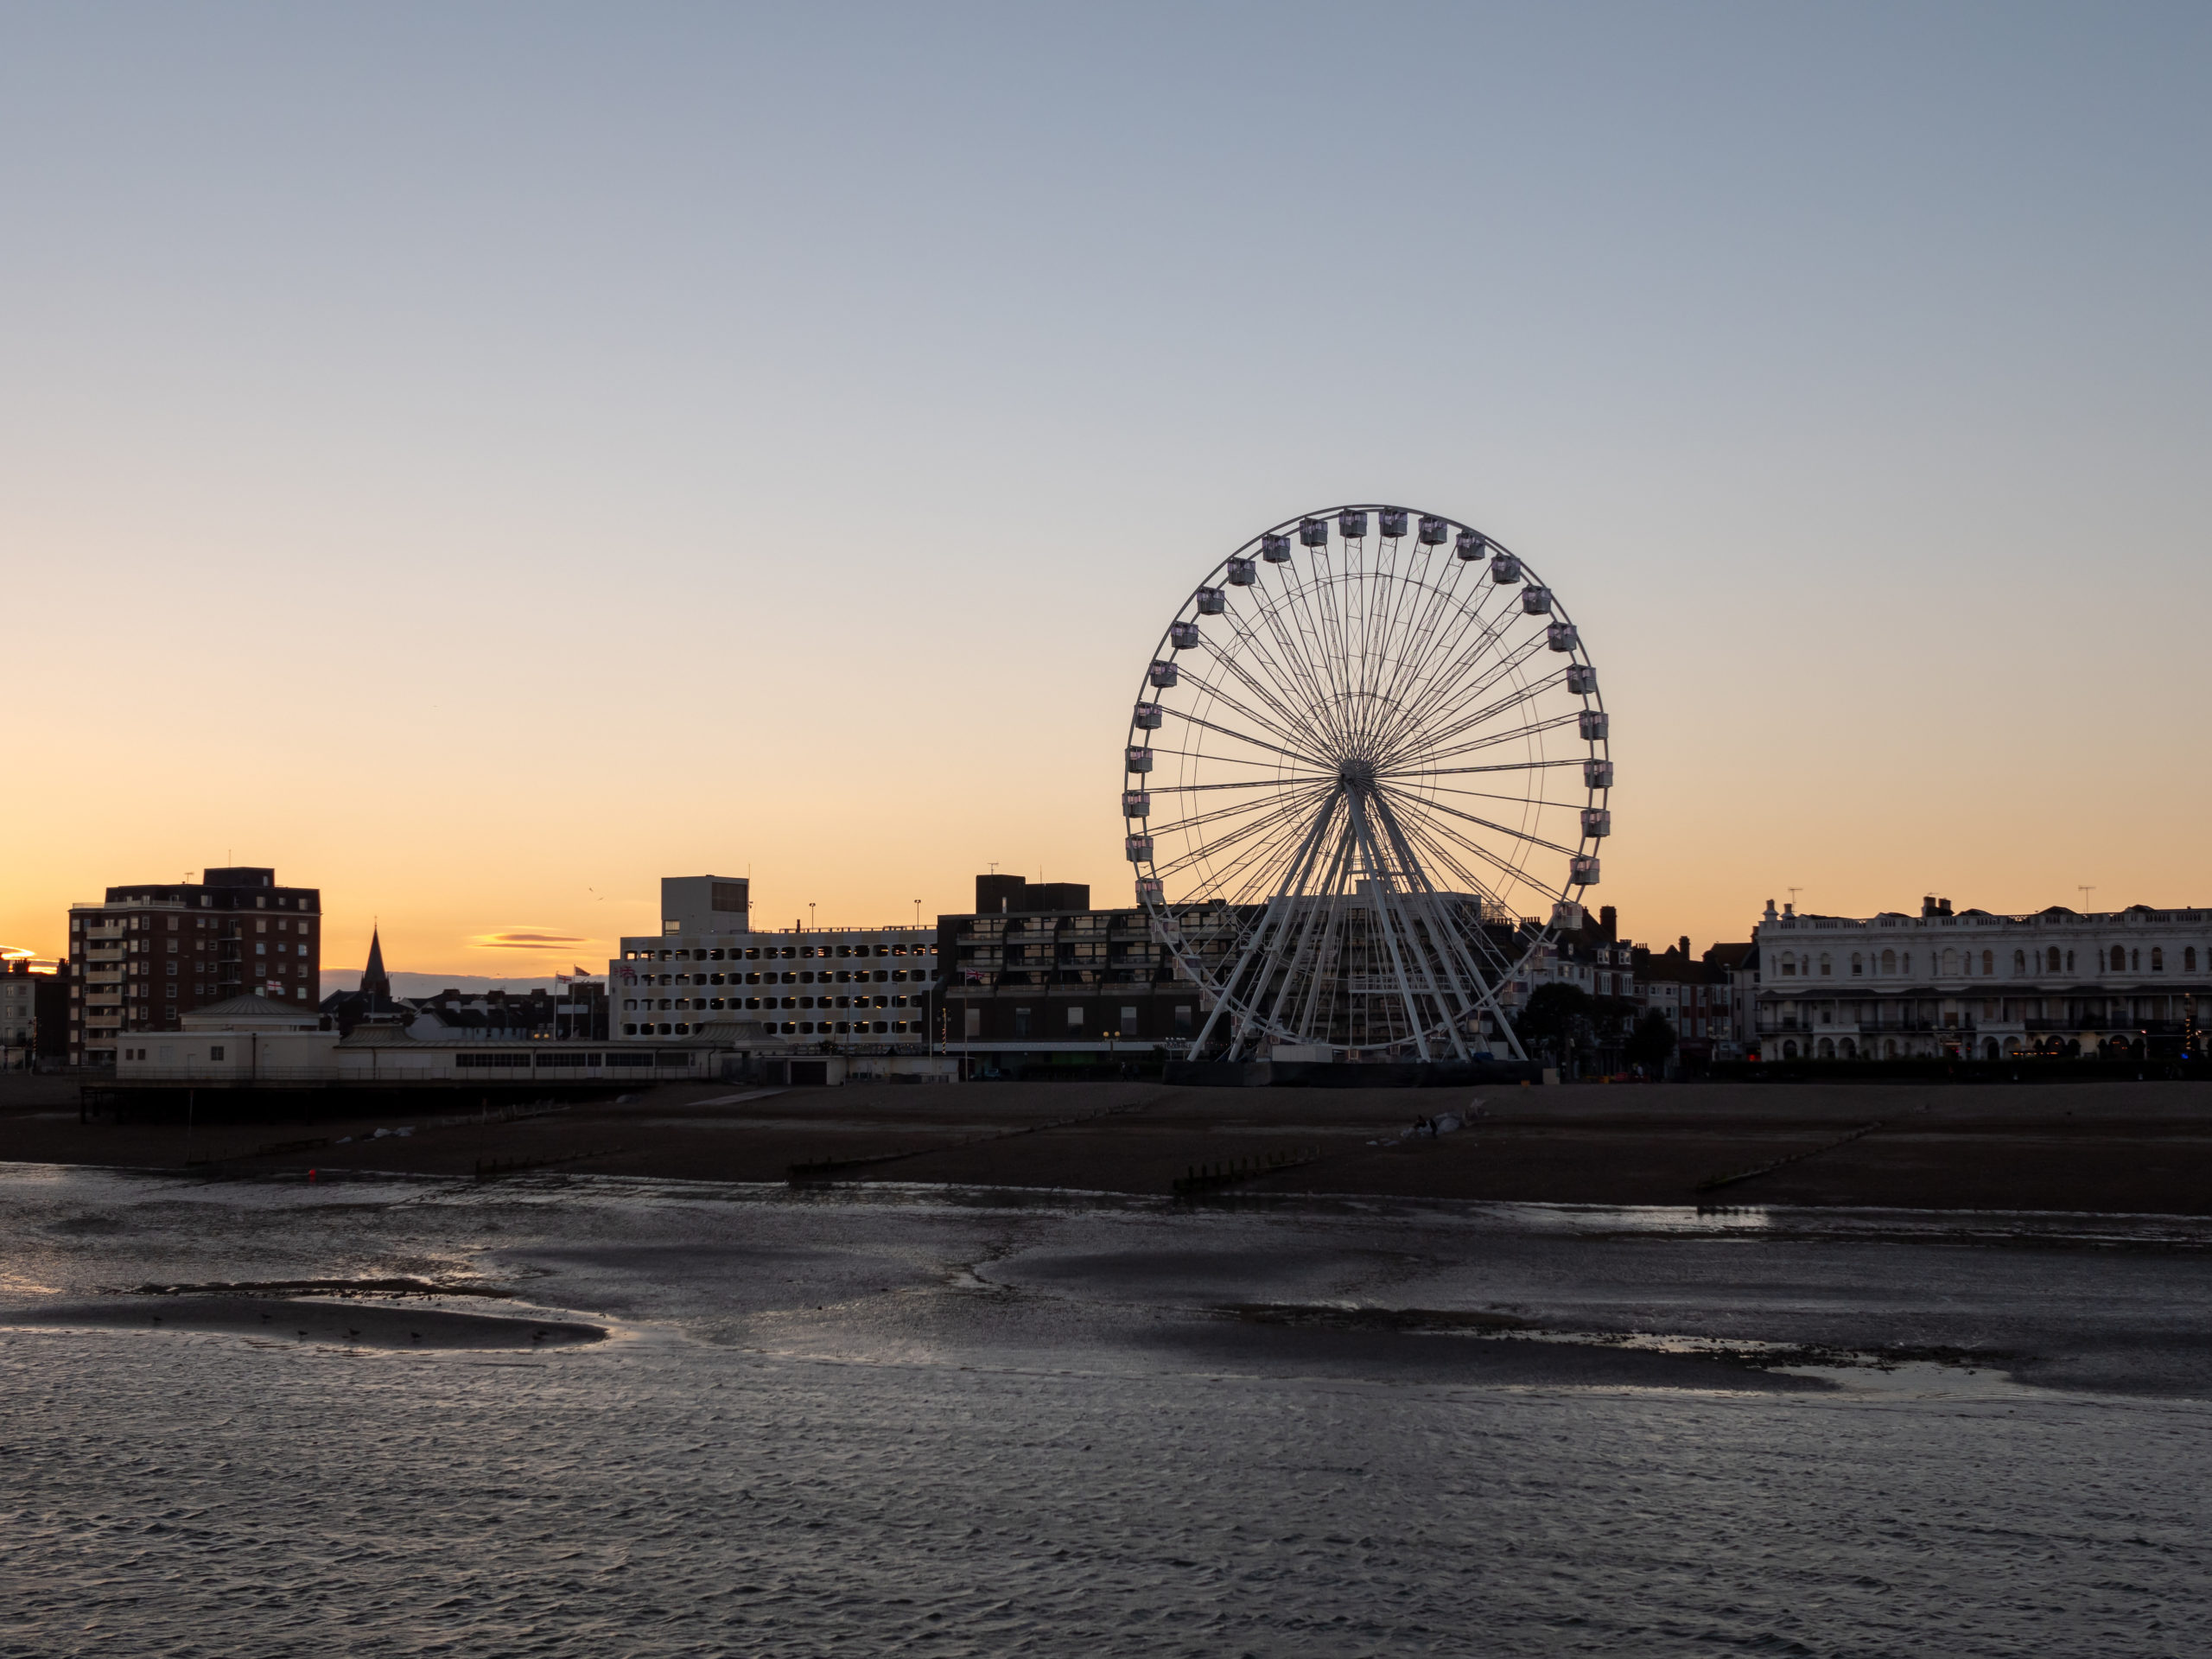 Ferris wheel on seafront at dusk